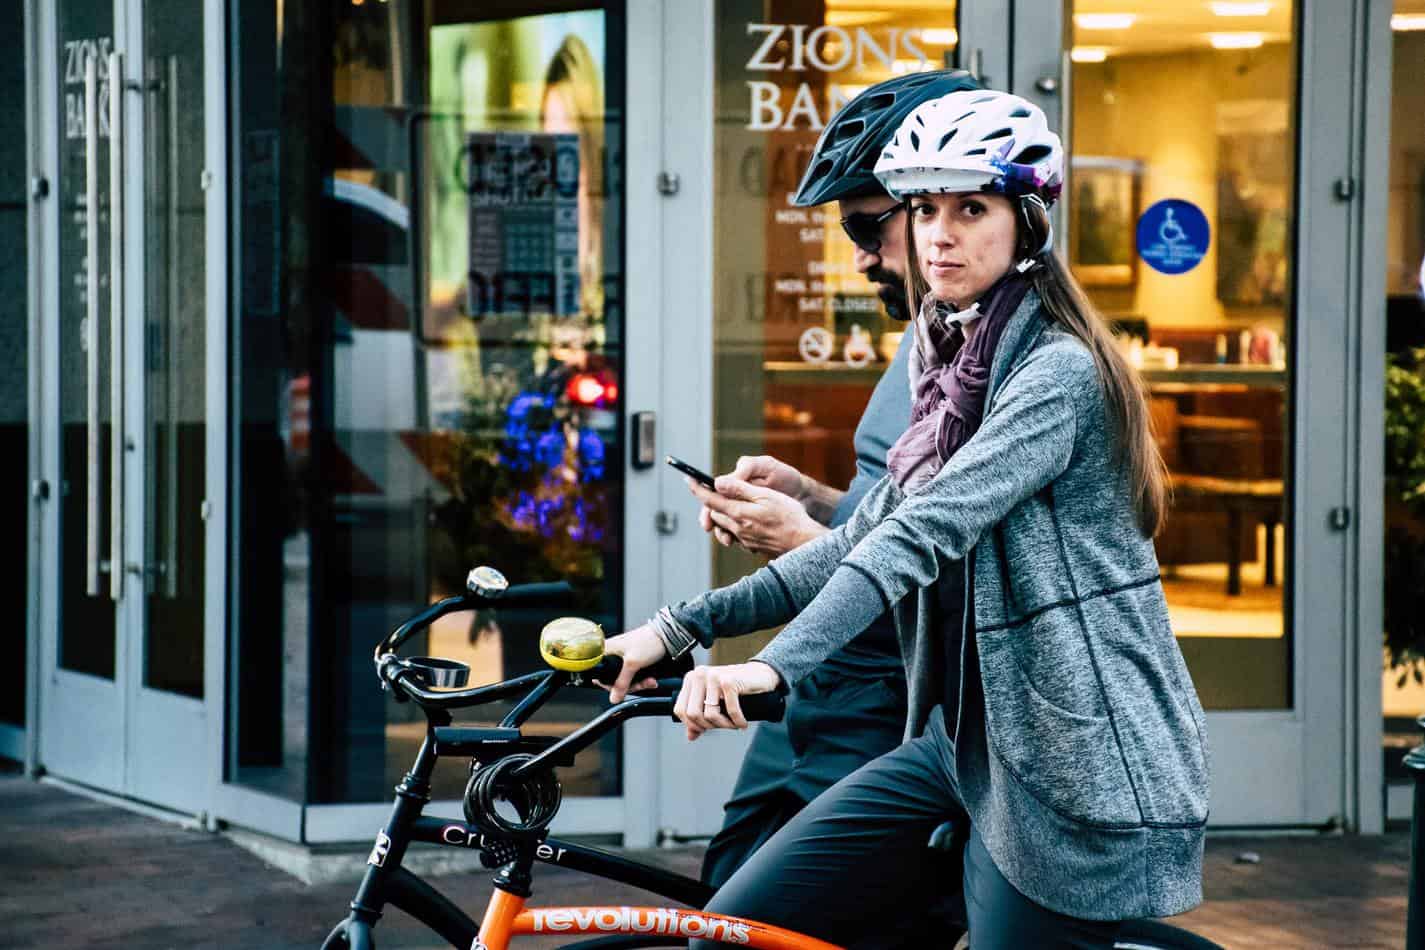 woman riding bike with helmet